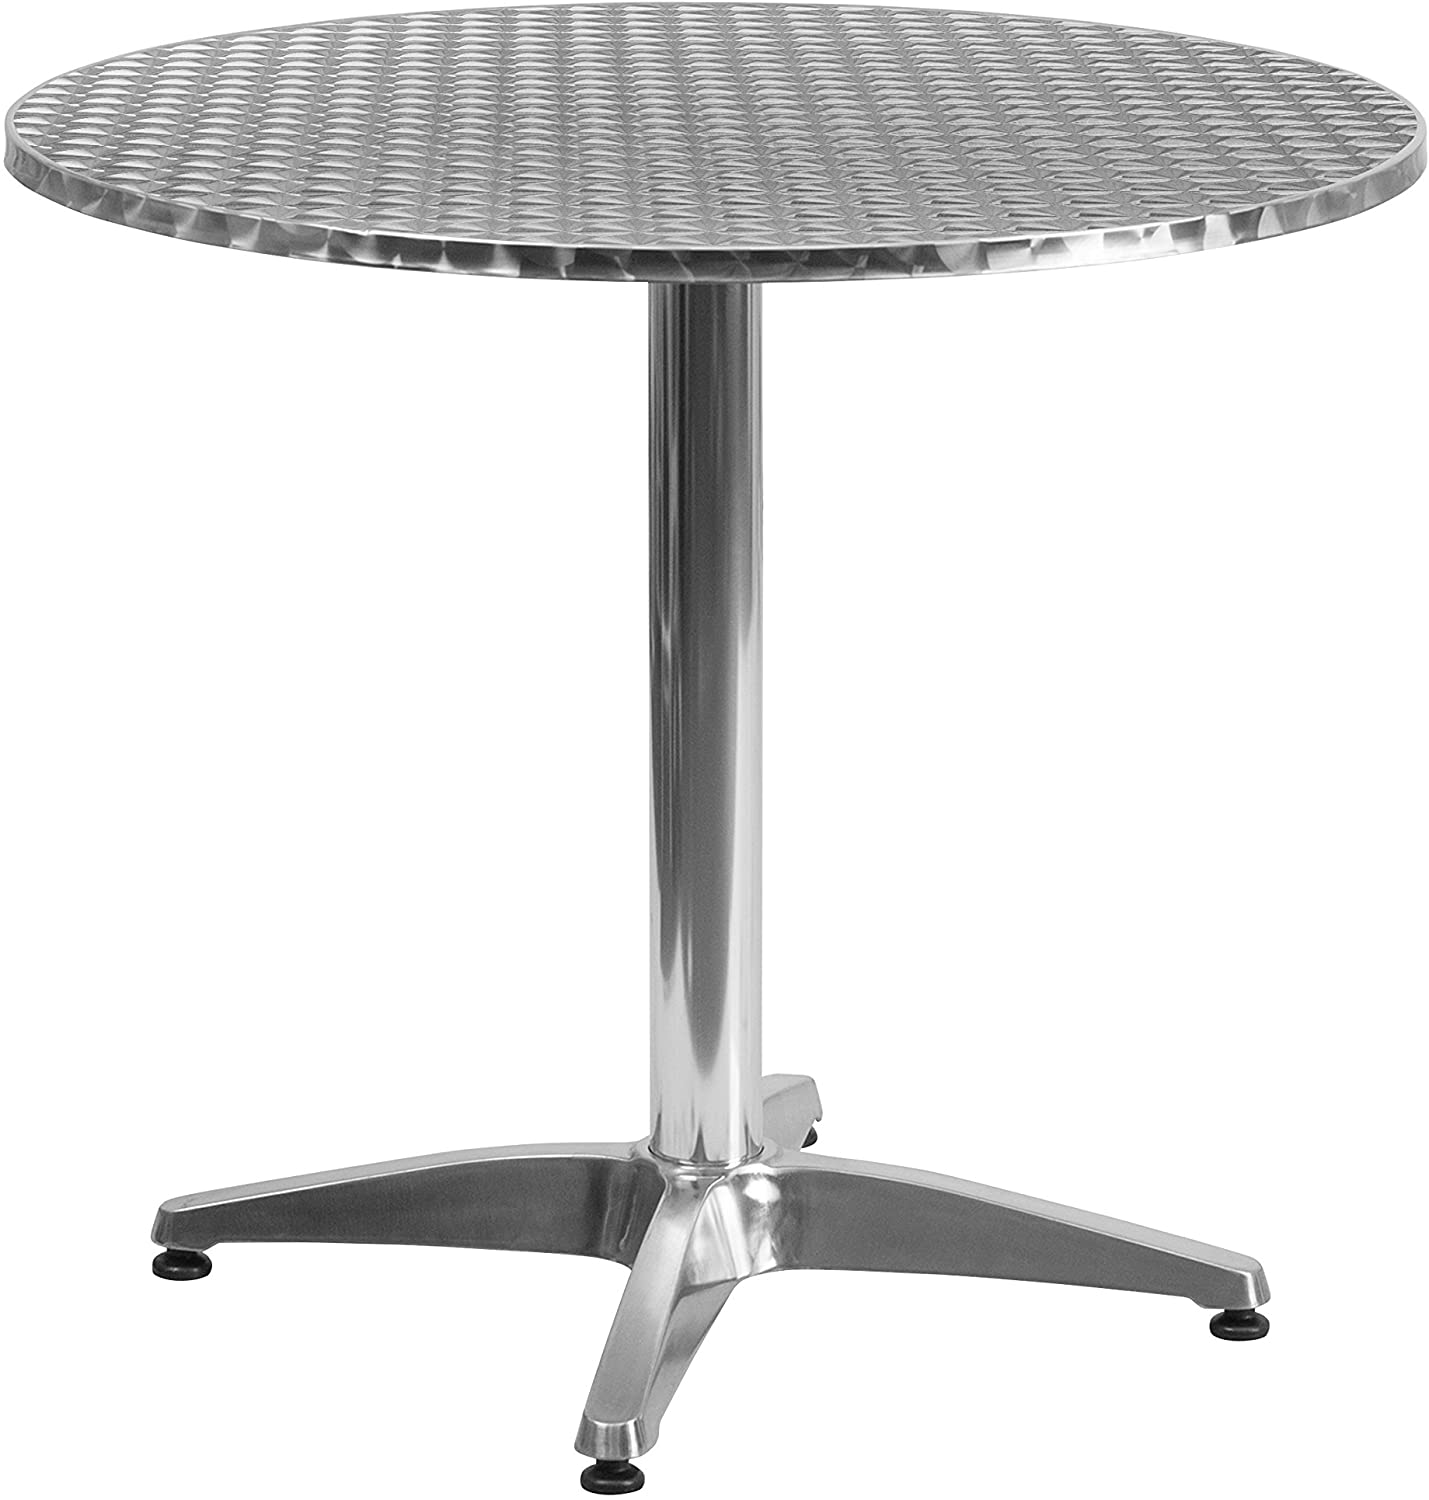 B00ZADCK0U Flash Furniture 31.5'' Round Aluminum Indoor-Outdoor Table with Base